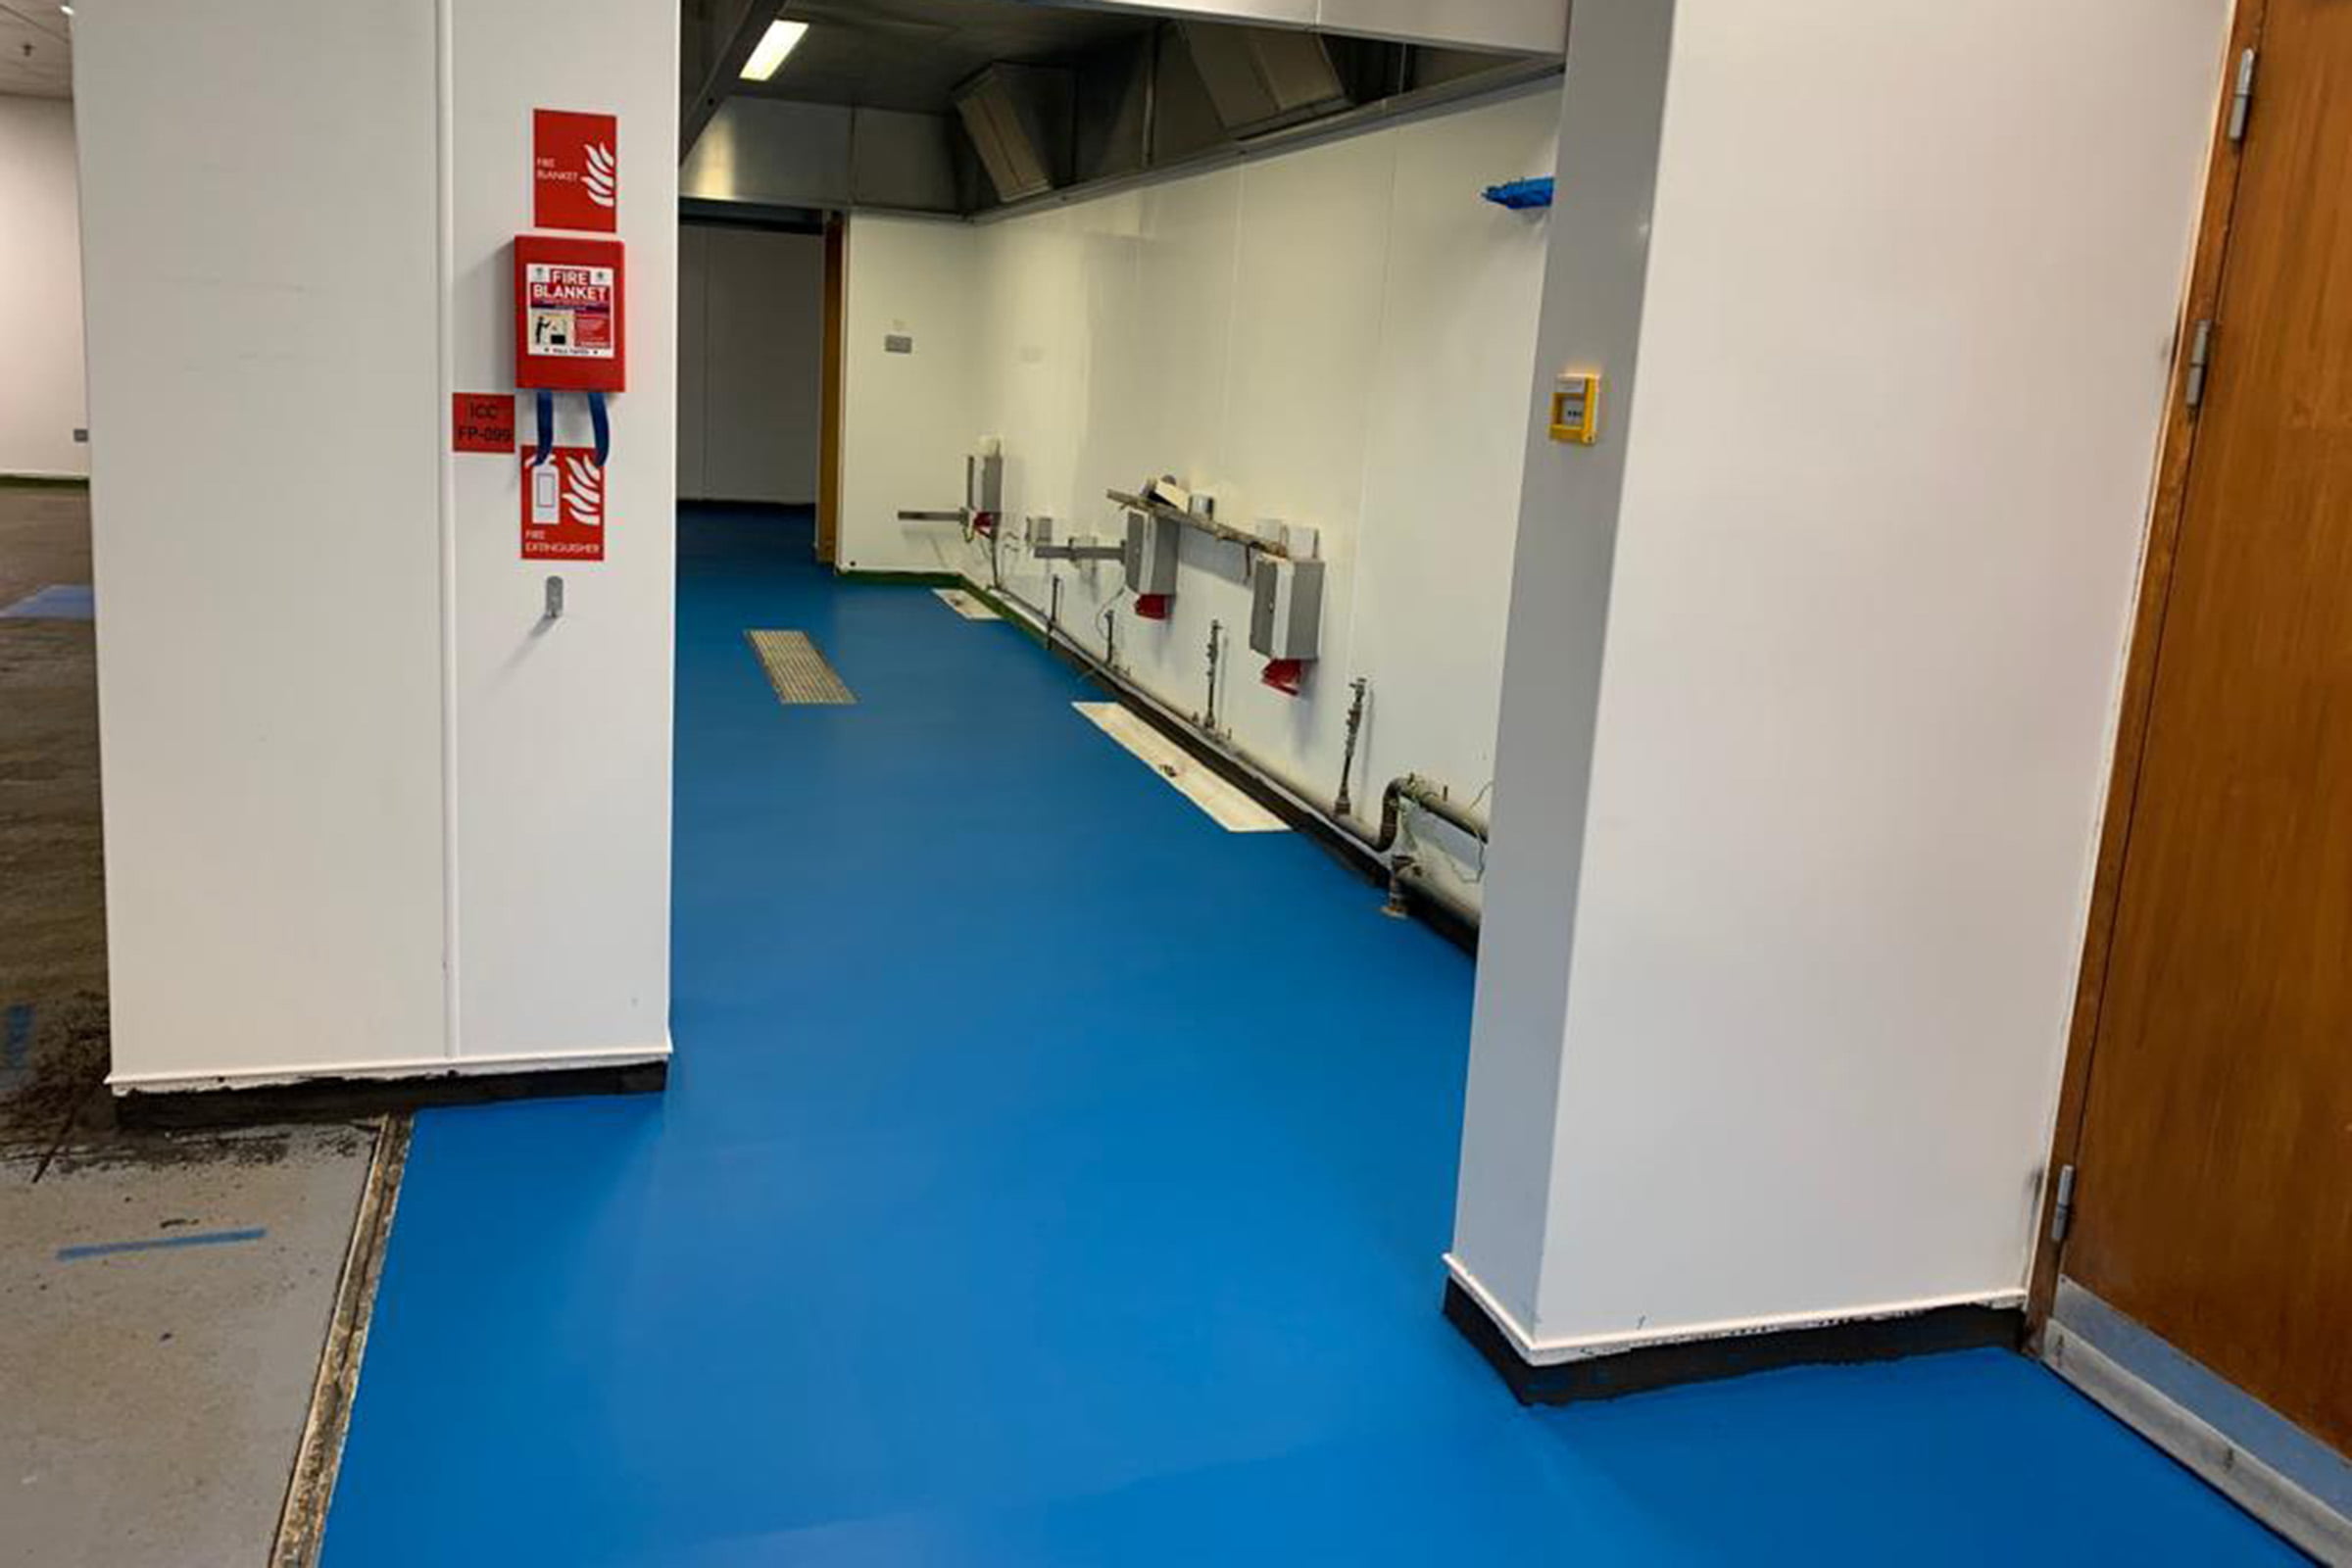 Polyurethane resin flooring in a hygienic / clean room environment